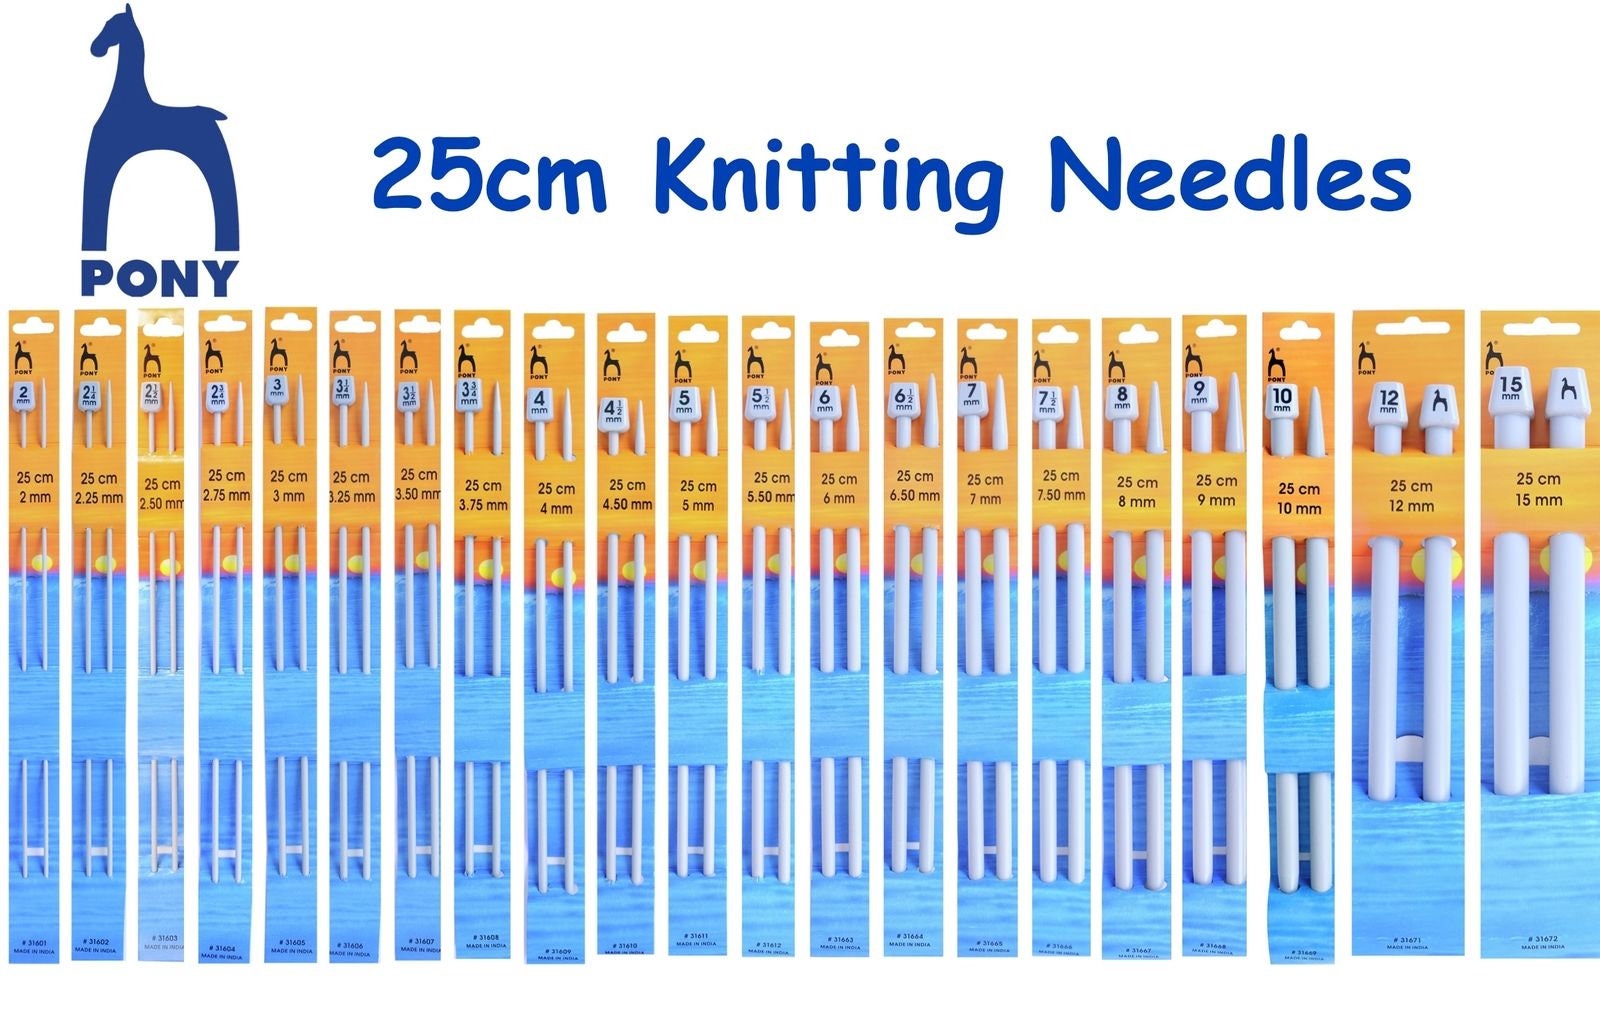 Pony Single Ended Classic Knitting Needles 25cm x 2.50mm 